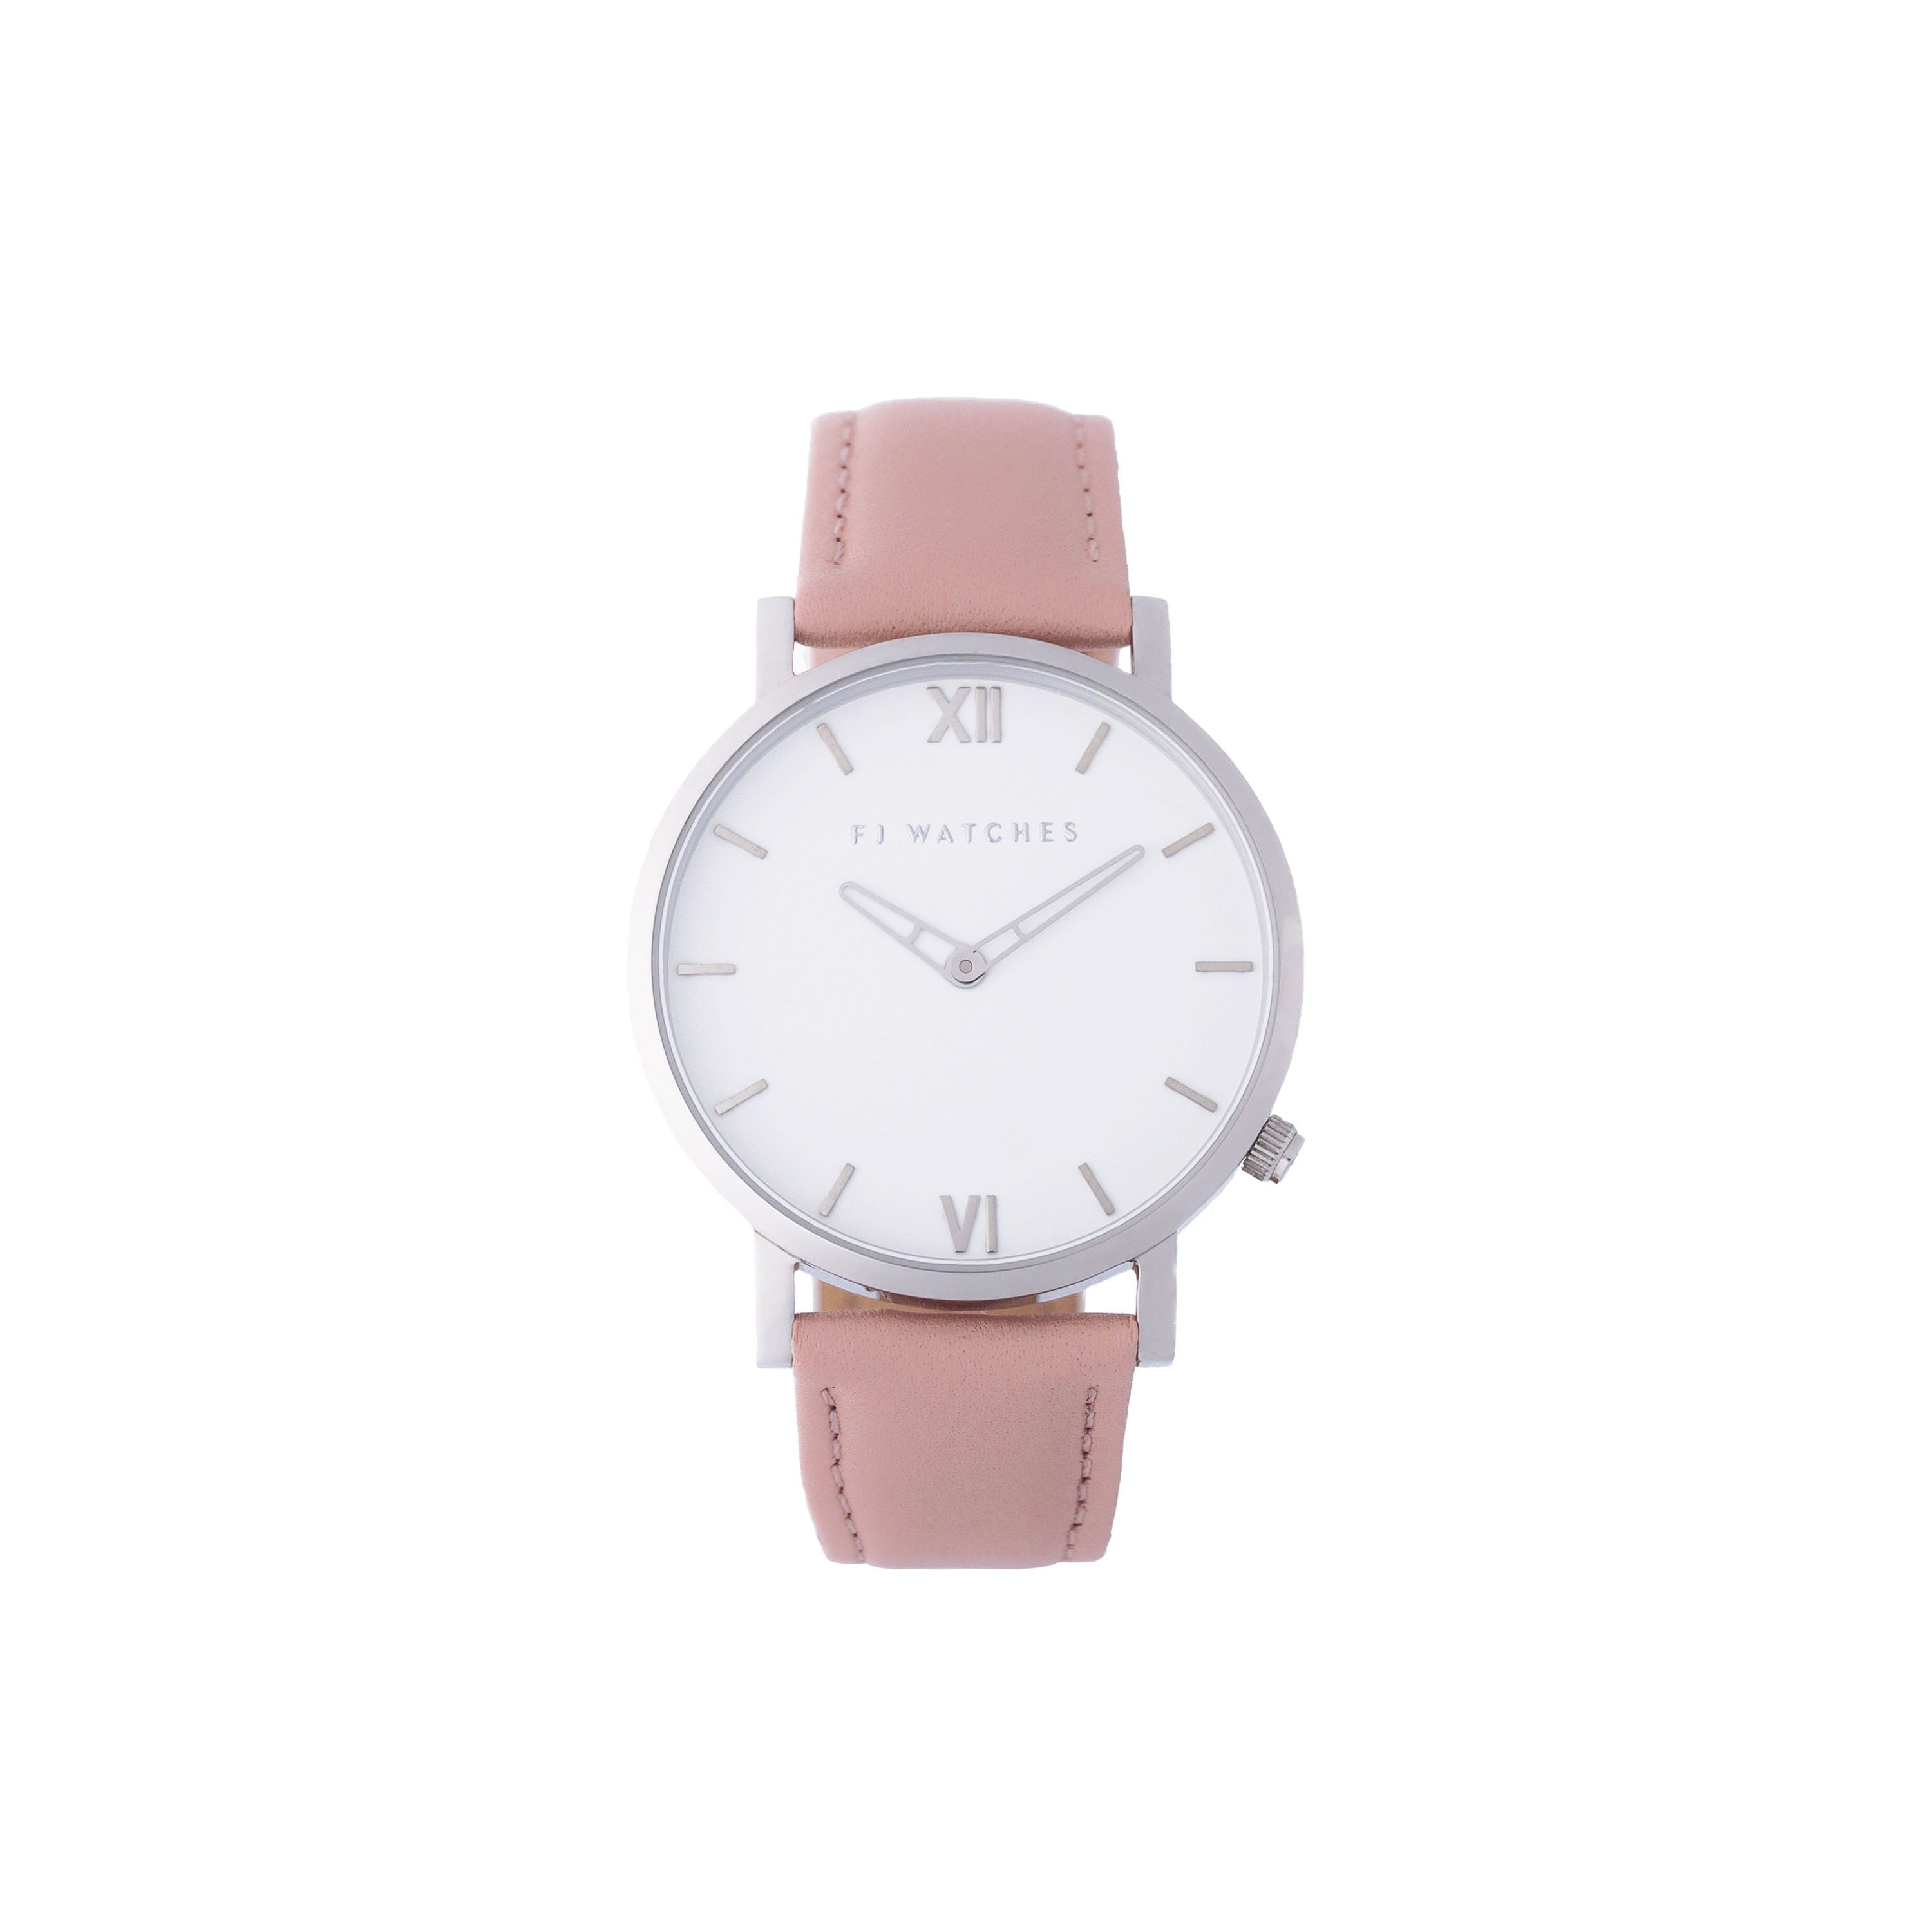 FJ Watches silver sun white women 36mm pink leather strap watch minimalist